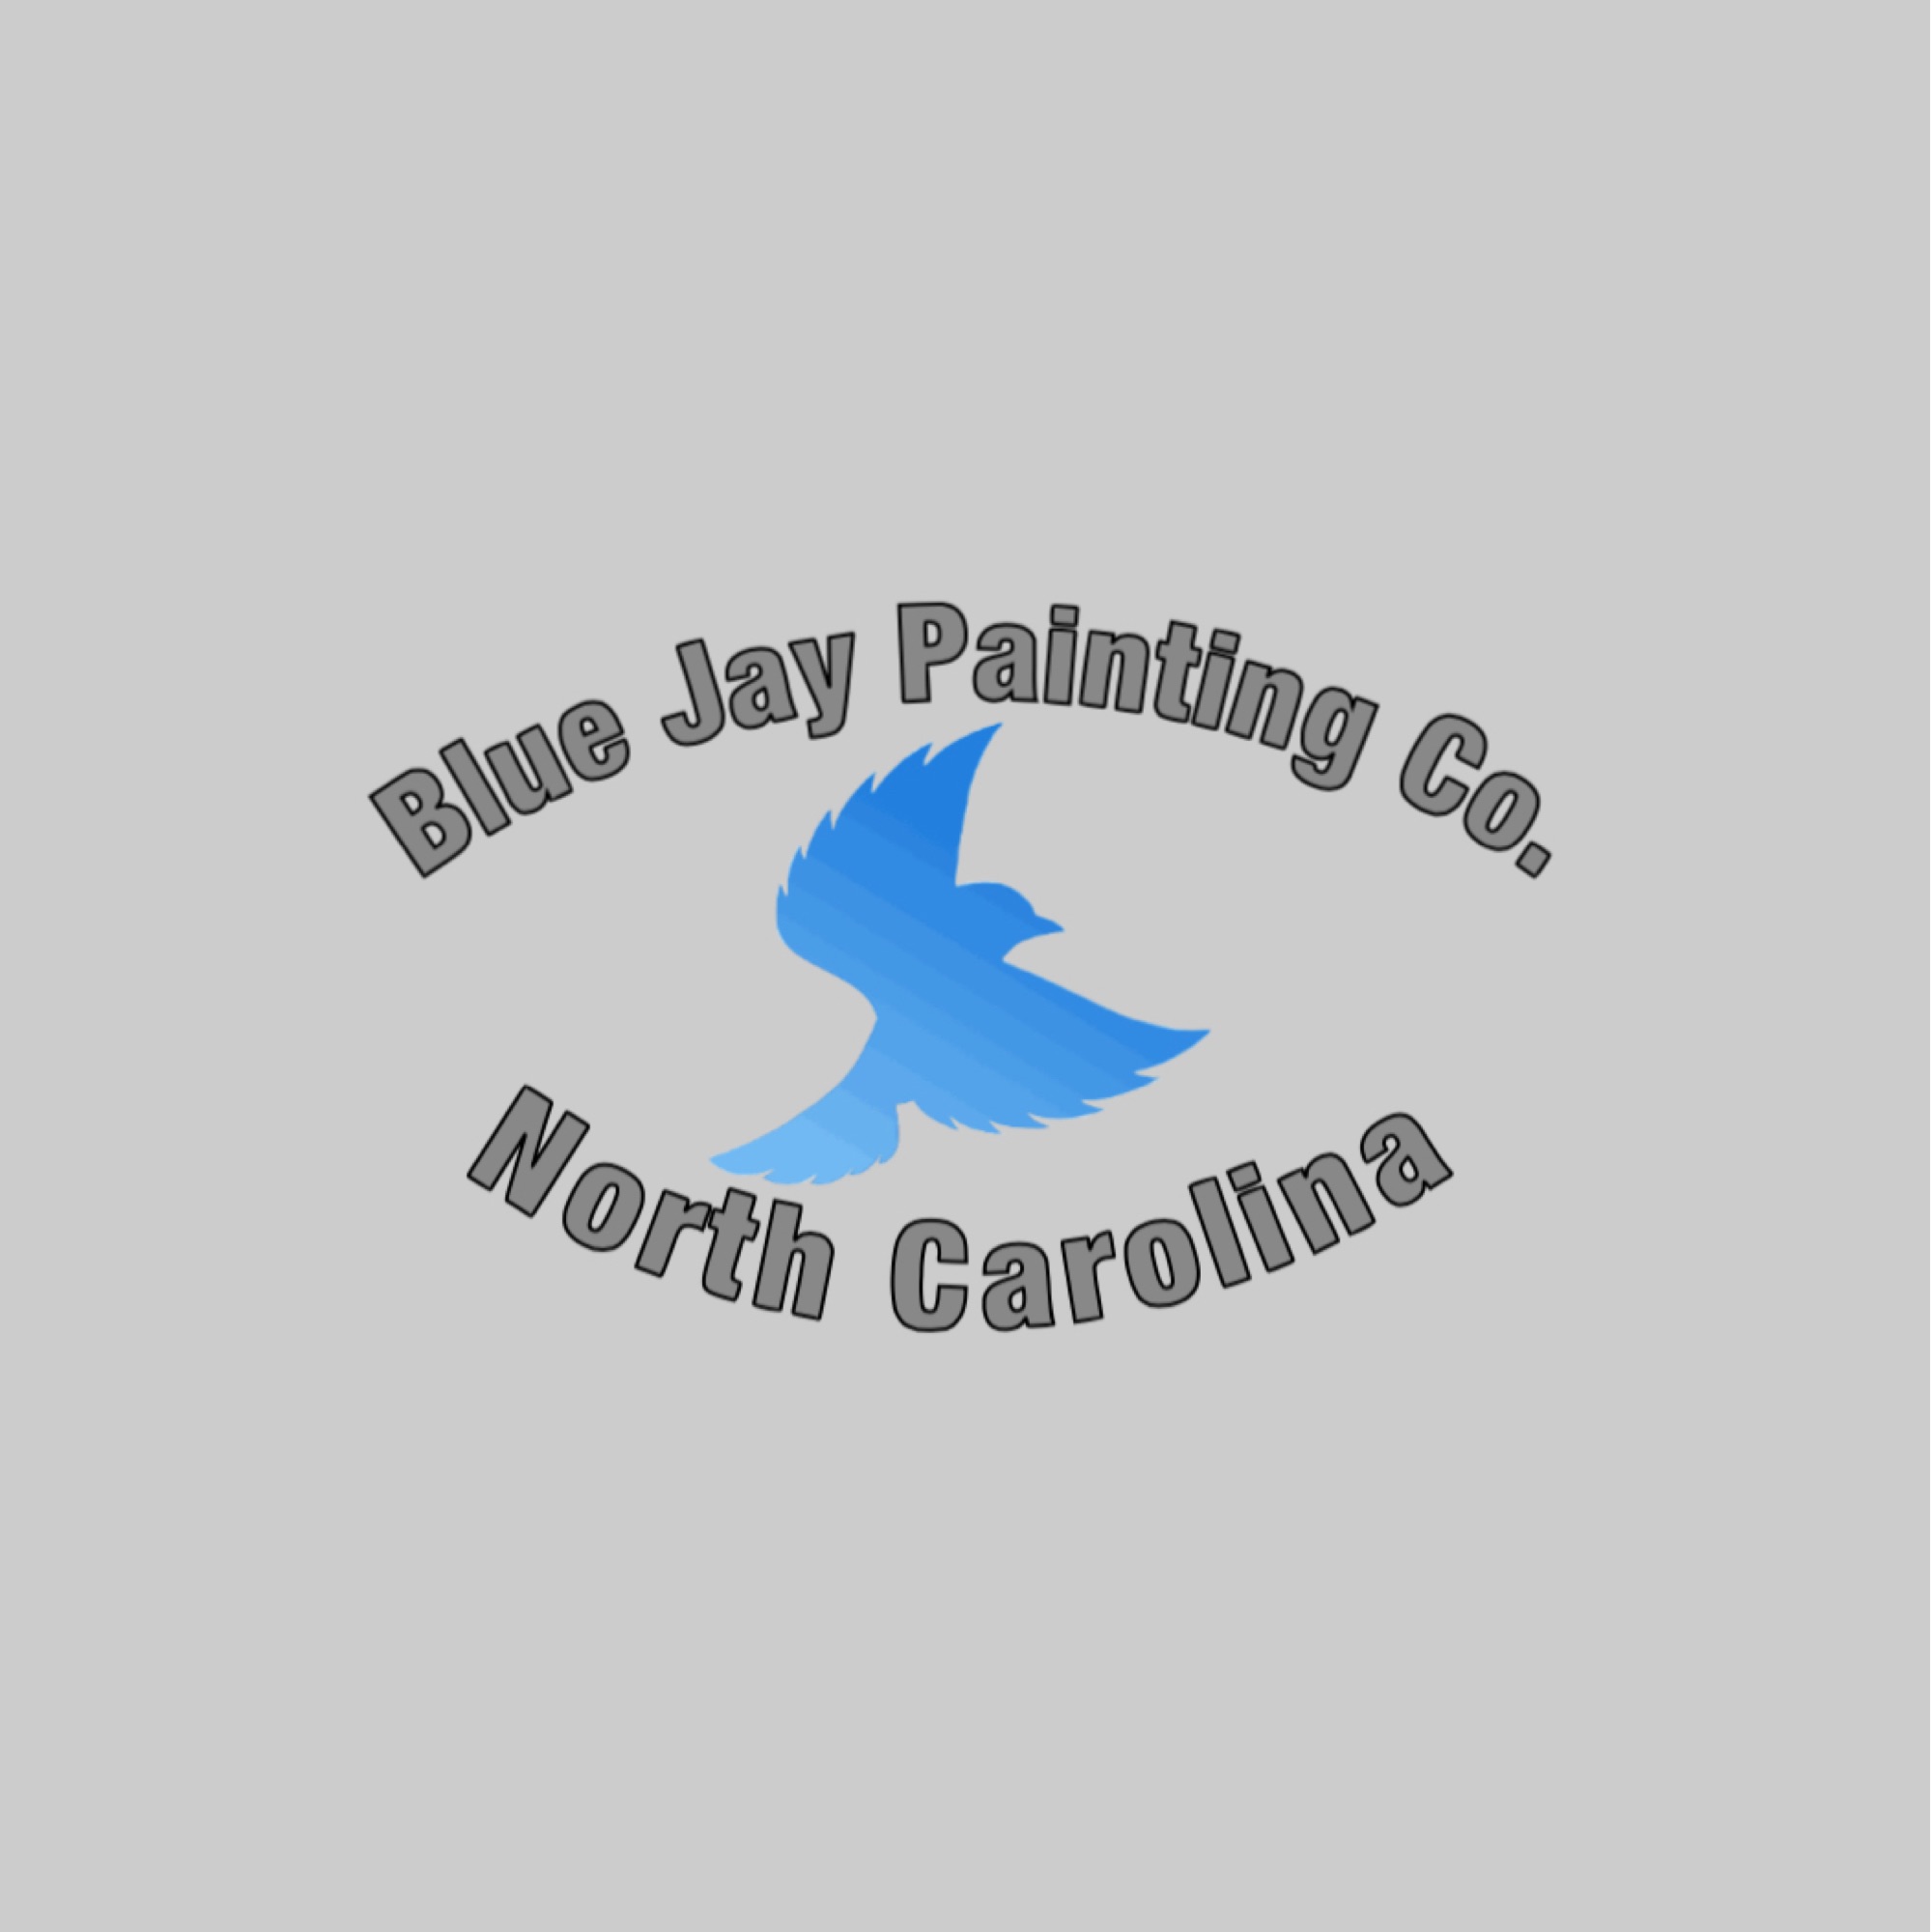 Blue Jay Painting Co. Logo